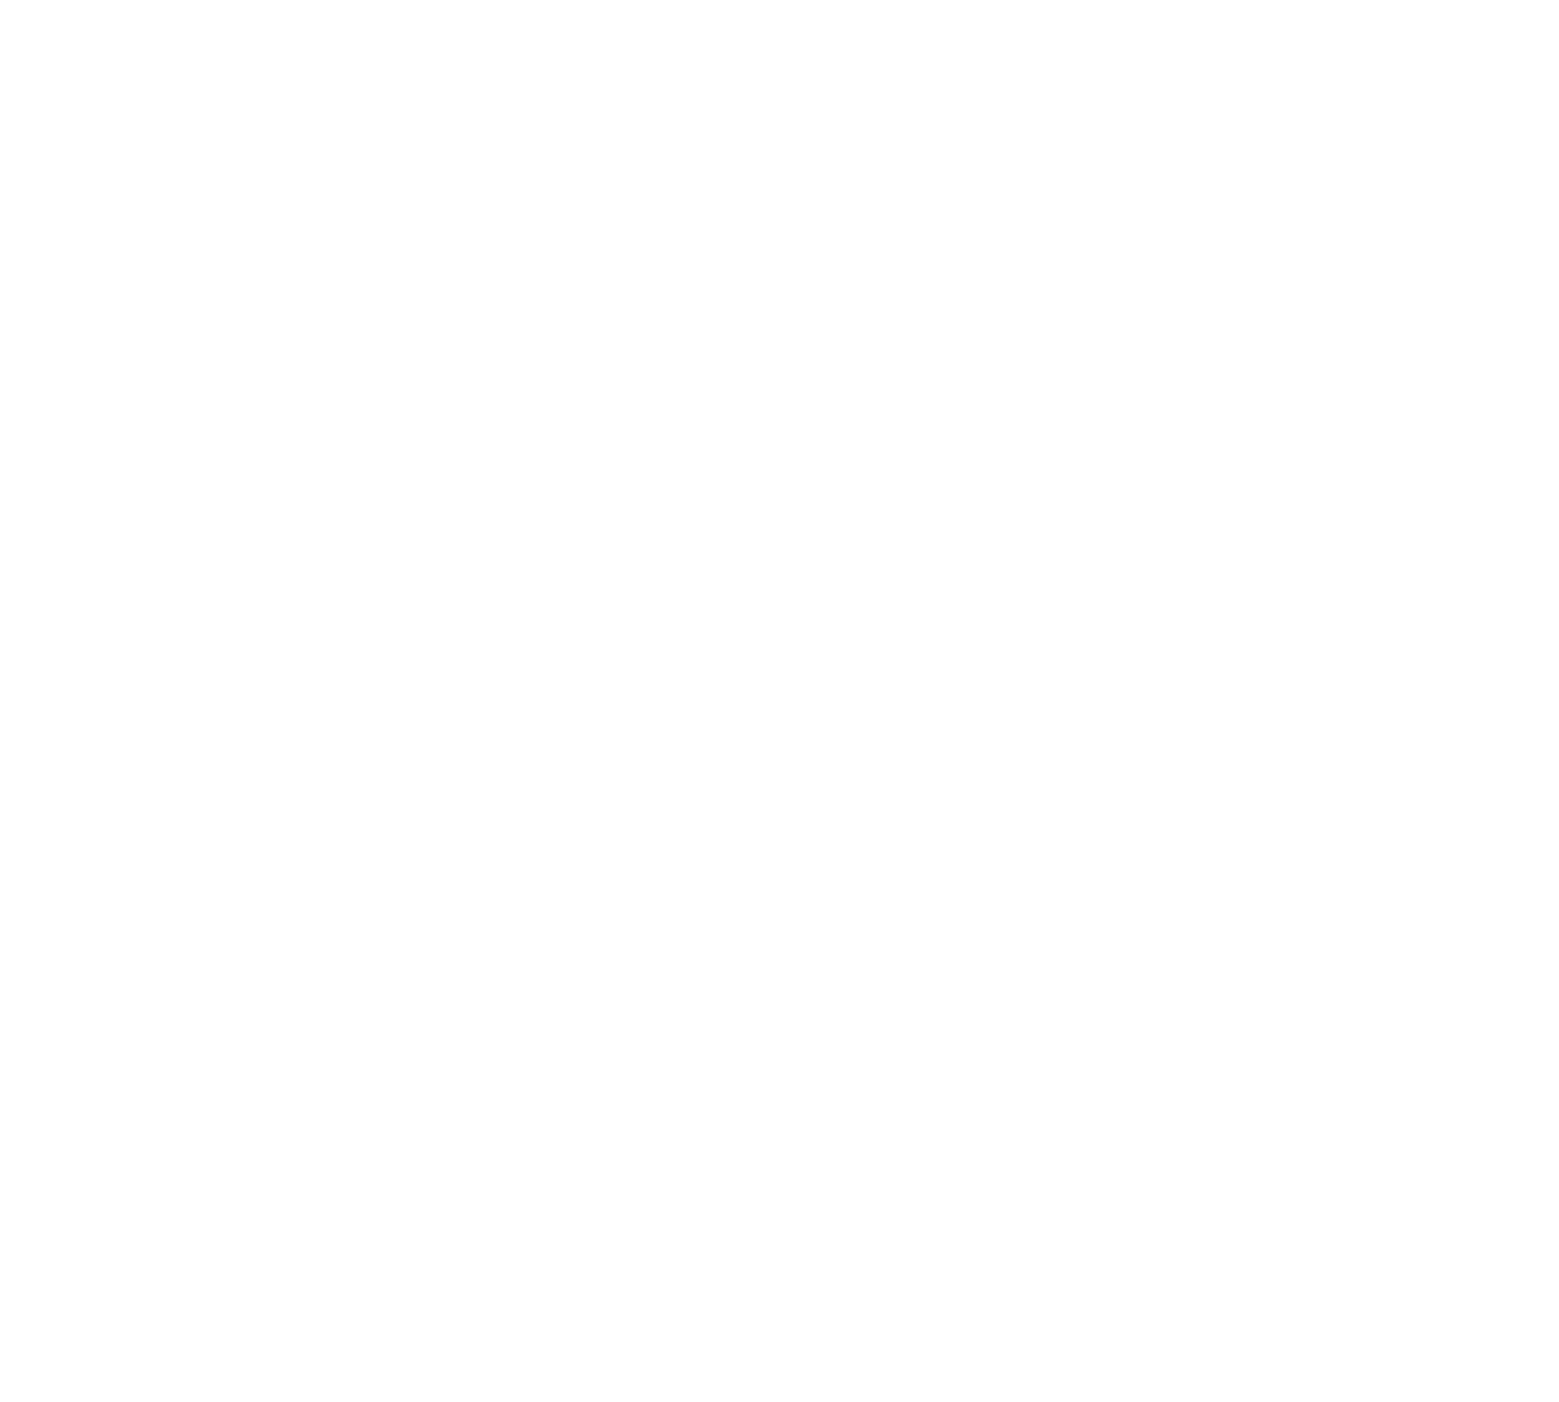 AngioDynamics logo for dark backgrounds (transparent PNG)